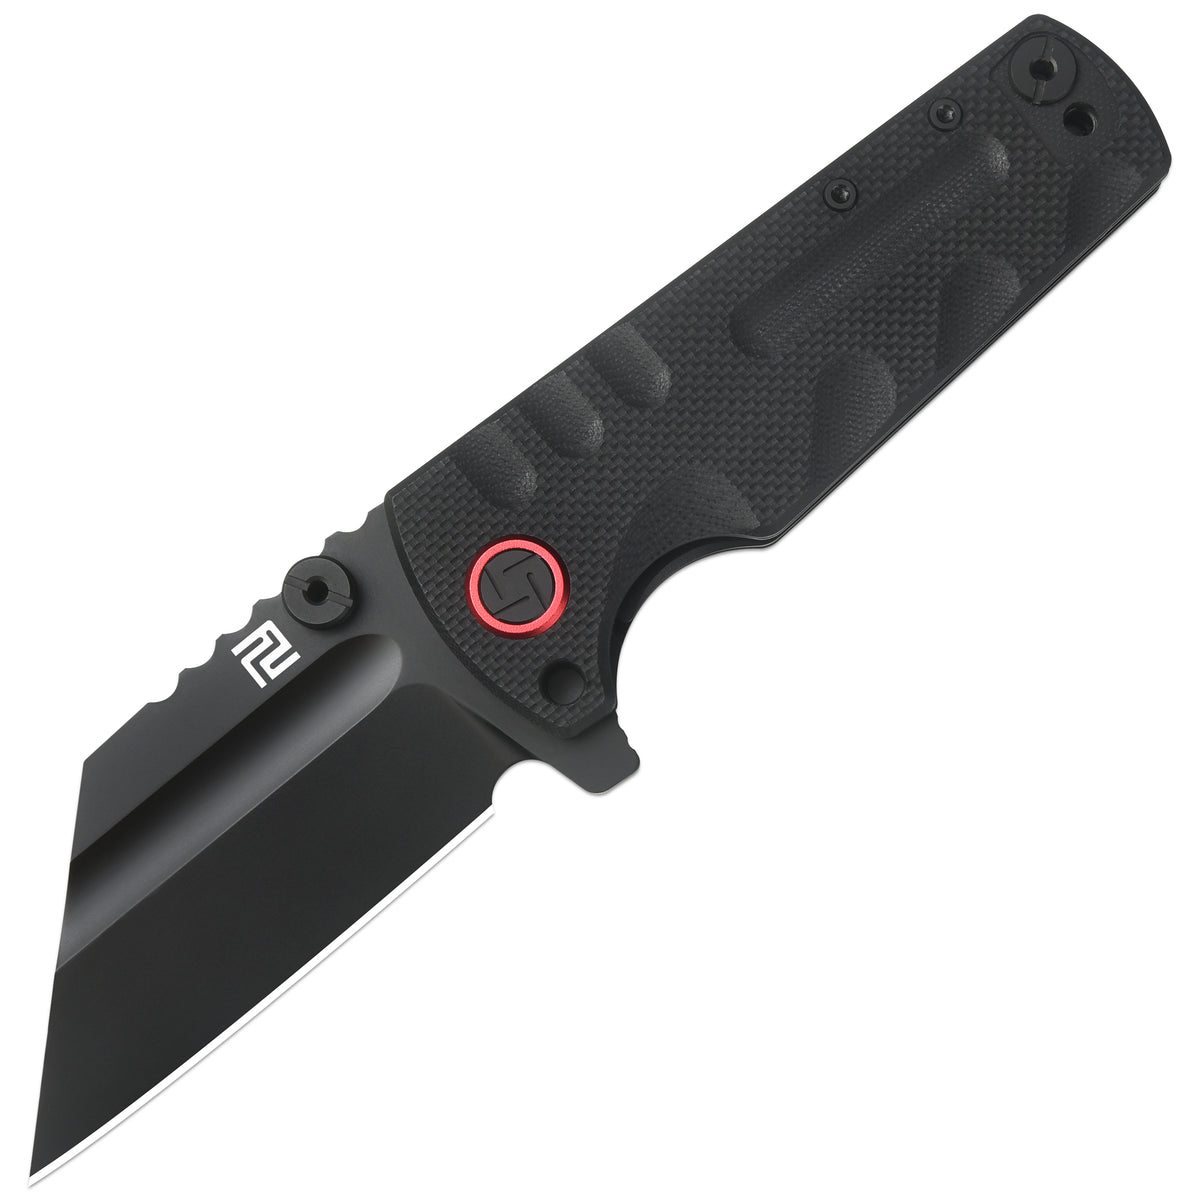 ARTISAN CUTLERY PROPONENT ATZ-1820P D2 Steel Black PVD Blade Black G10 Handle Pocket Knife Folding Knife EDC Knife